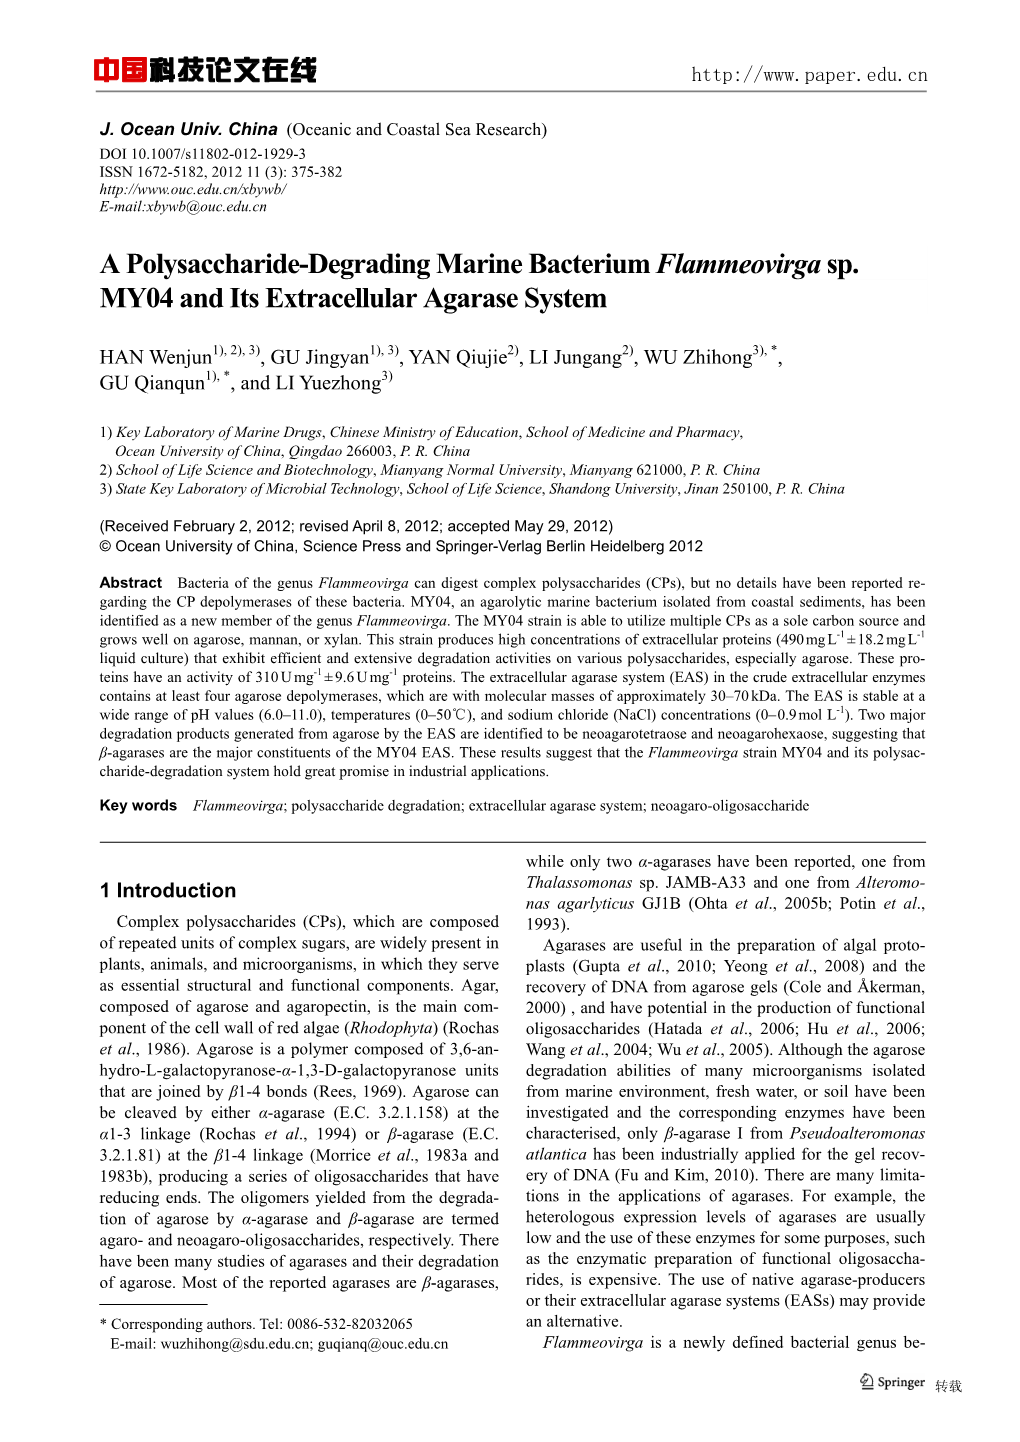 A Polysaccharide-Degrading Marine Bacterium Flammeovirga Sp. MY04 and Its Extracellular Agarase System